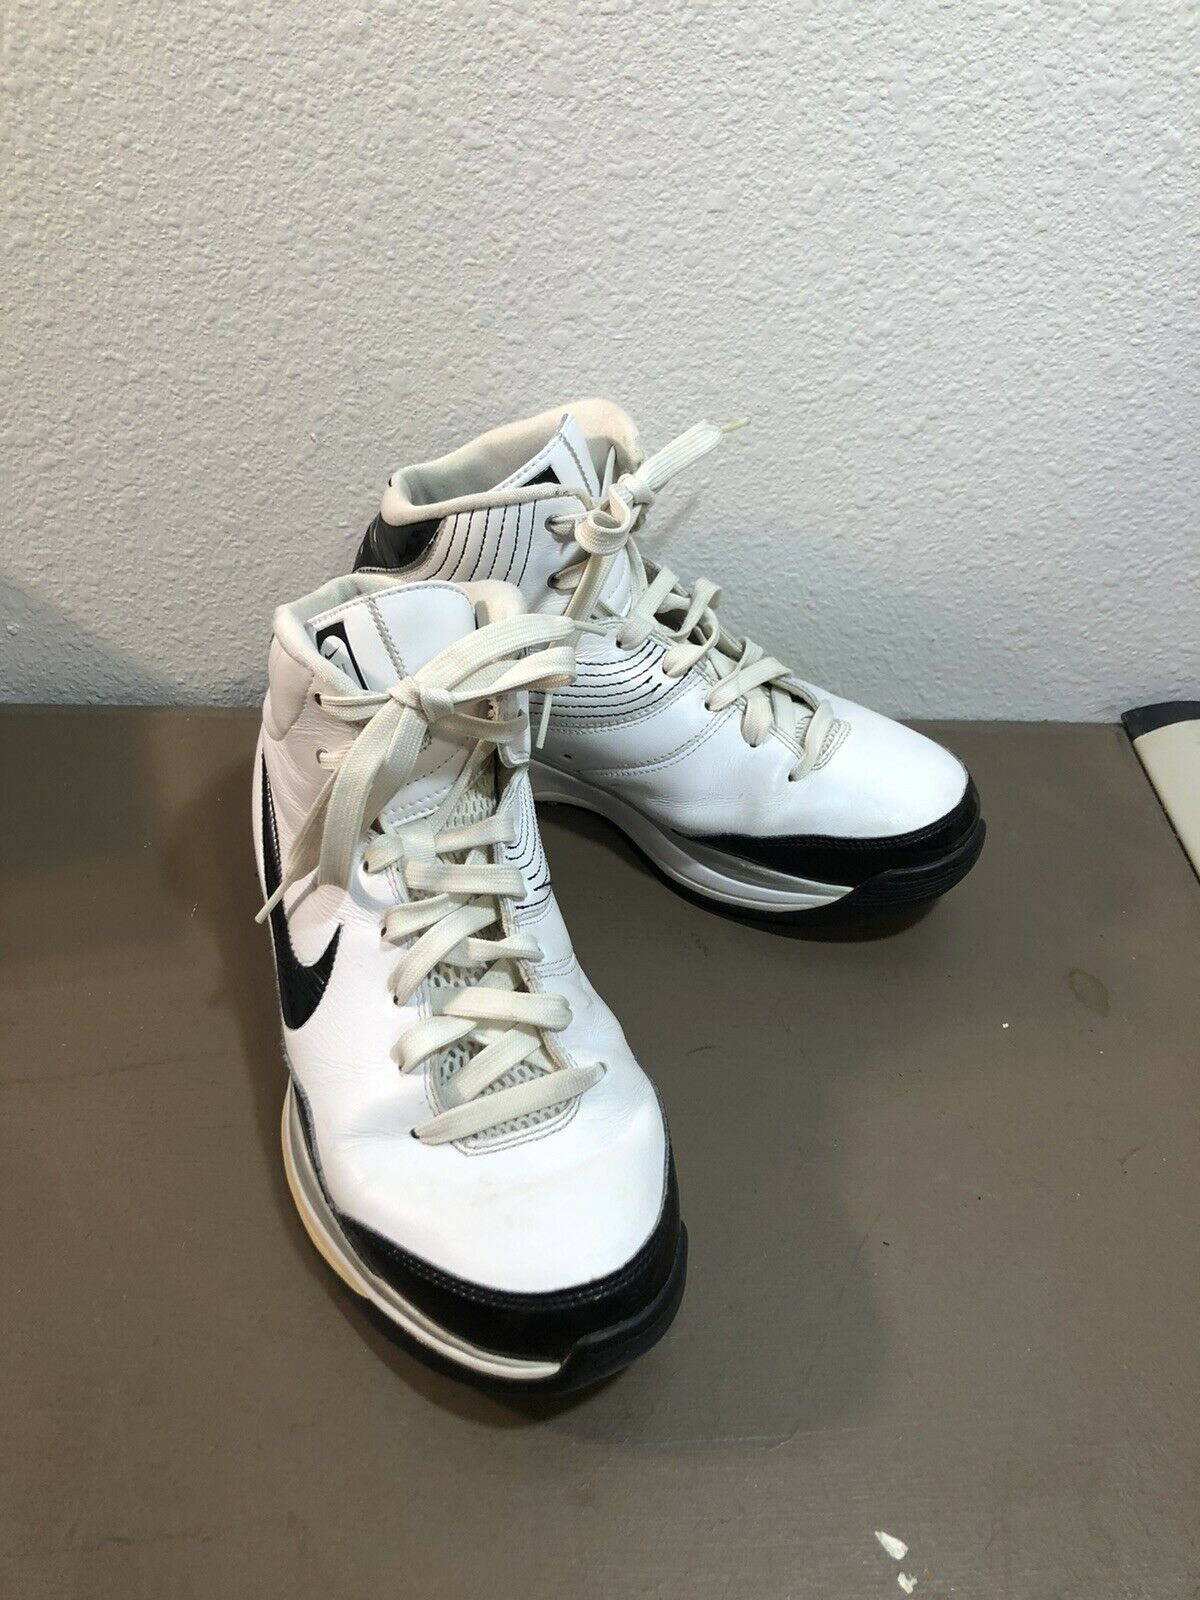 Nike Elite Basketball Shoes High Tops White Leather Women's Size 8.5 EU 40